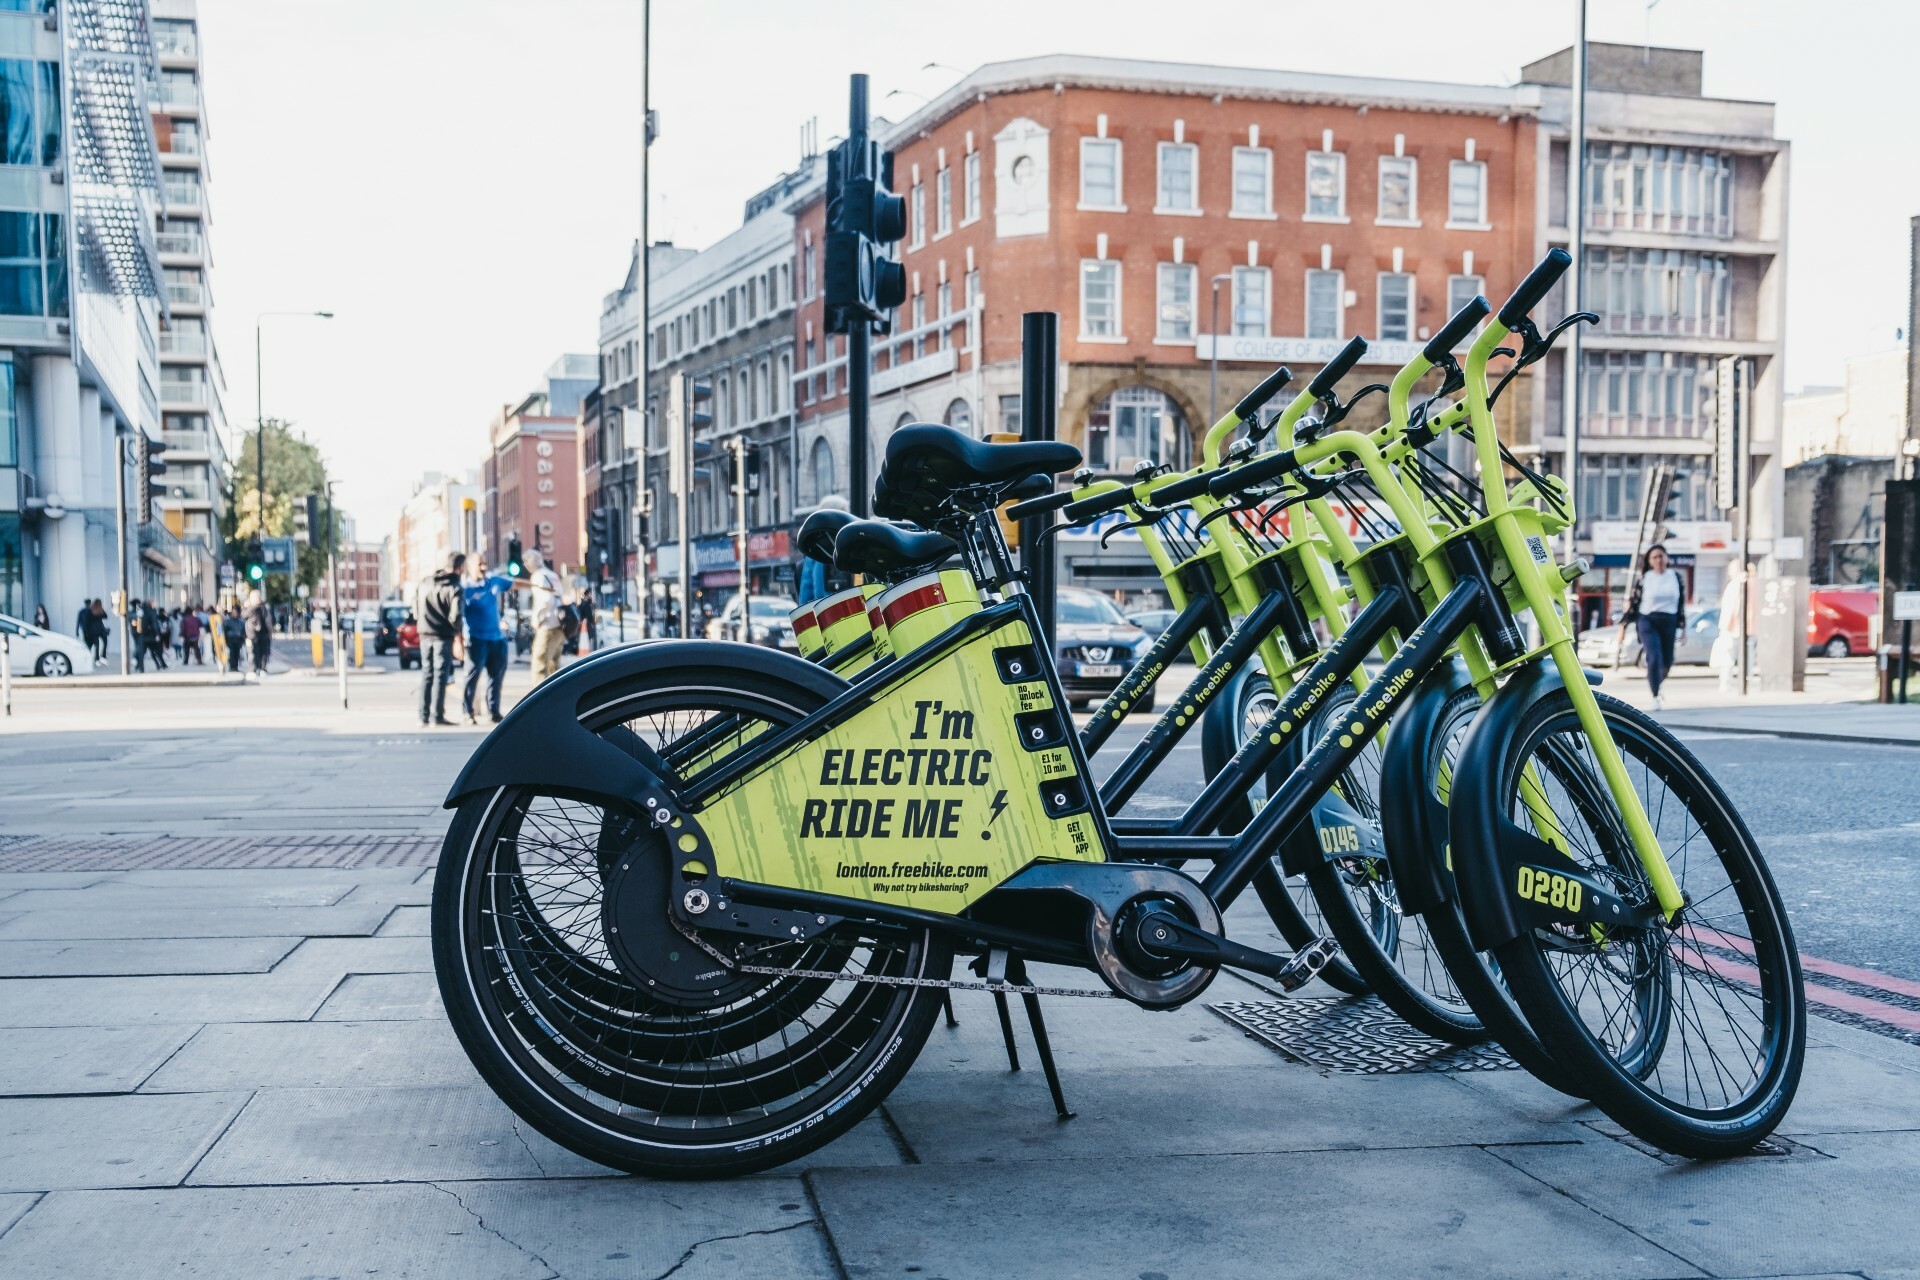 an-e-bike-proficiency-scheme-has-been-launched-in-london